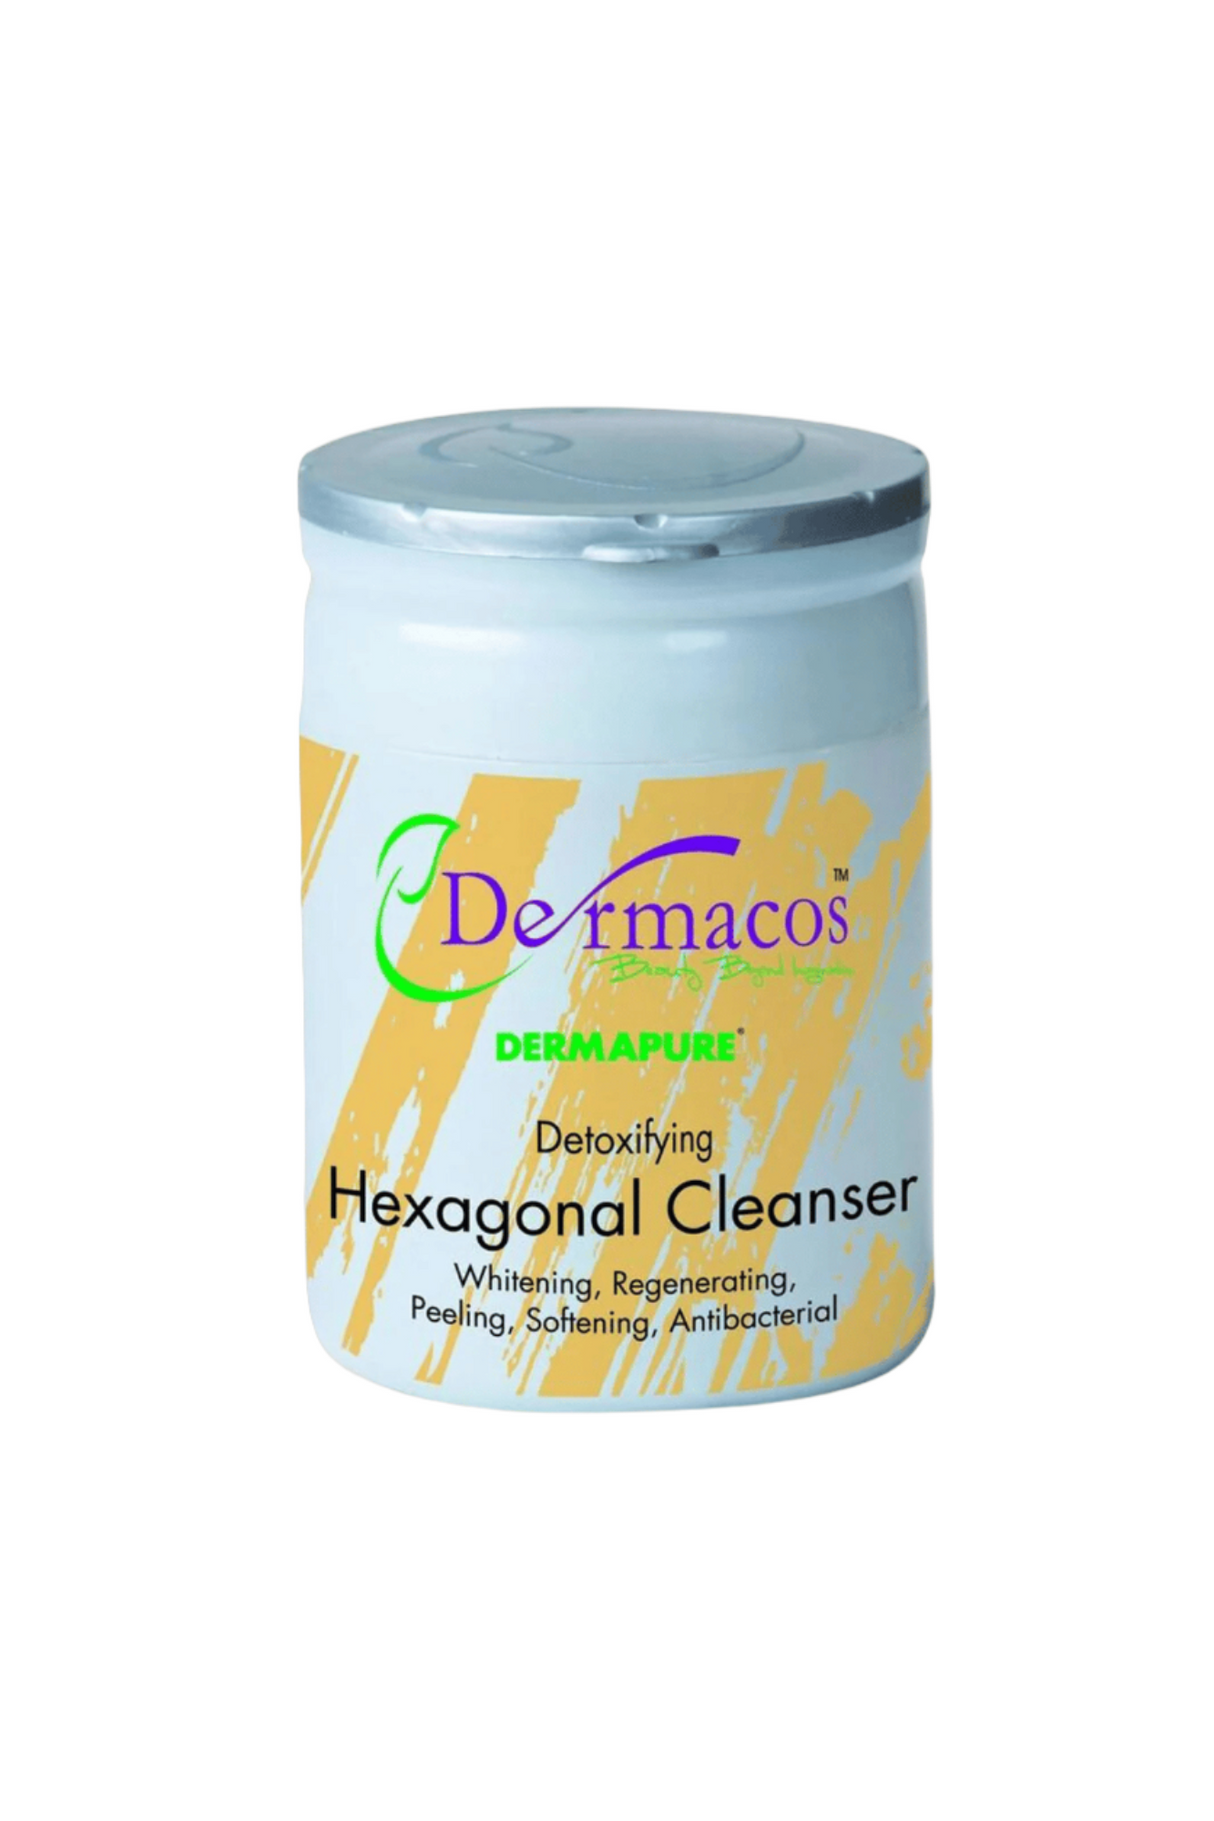 dermacos hexagonal cleanser 500g